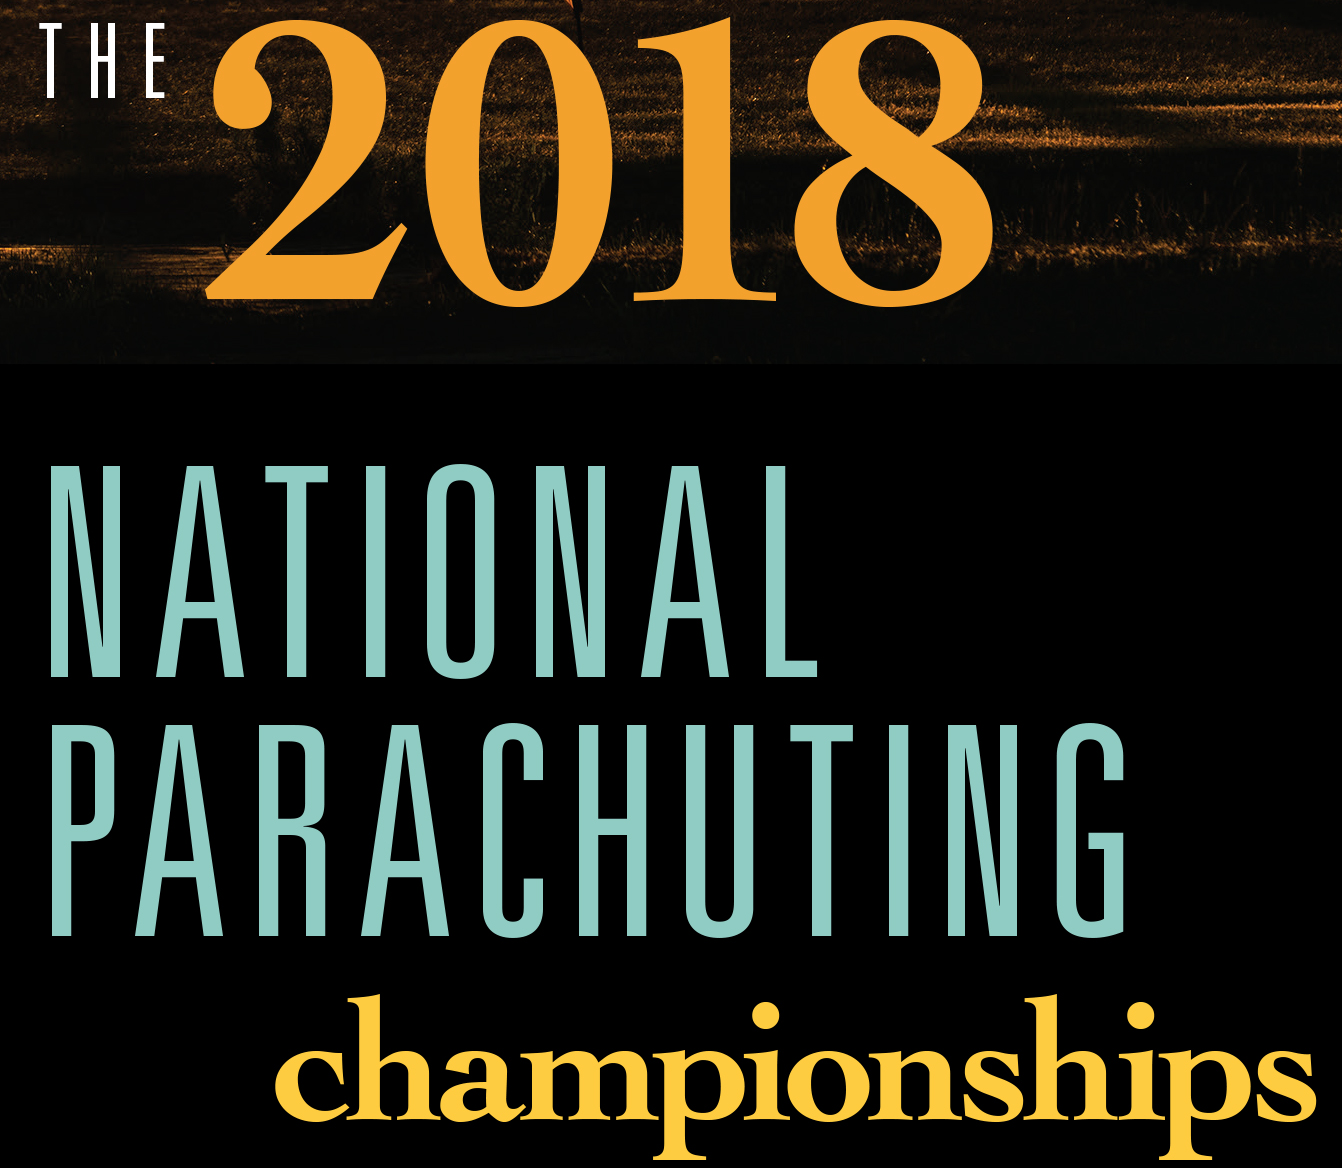 The 2018 National Parachuting Championships